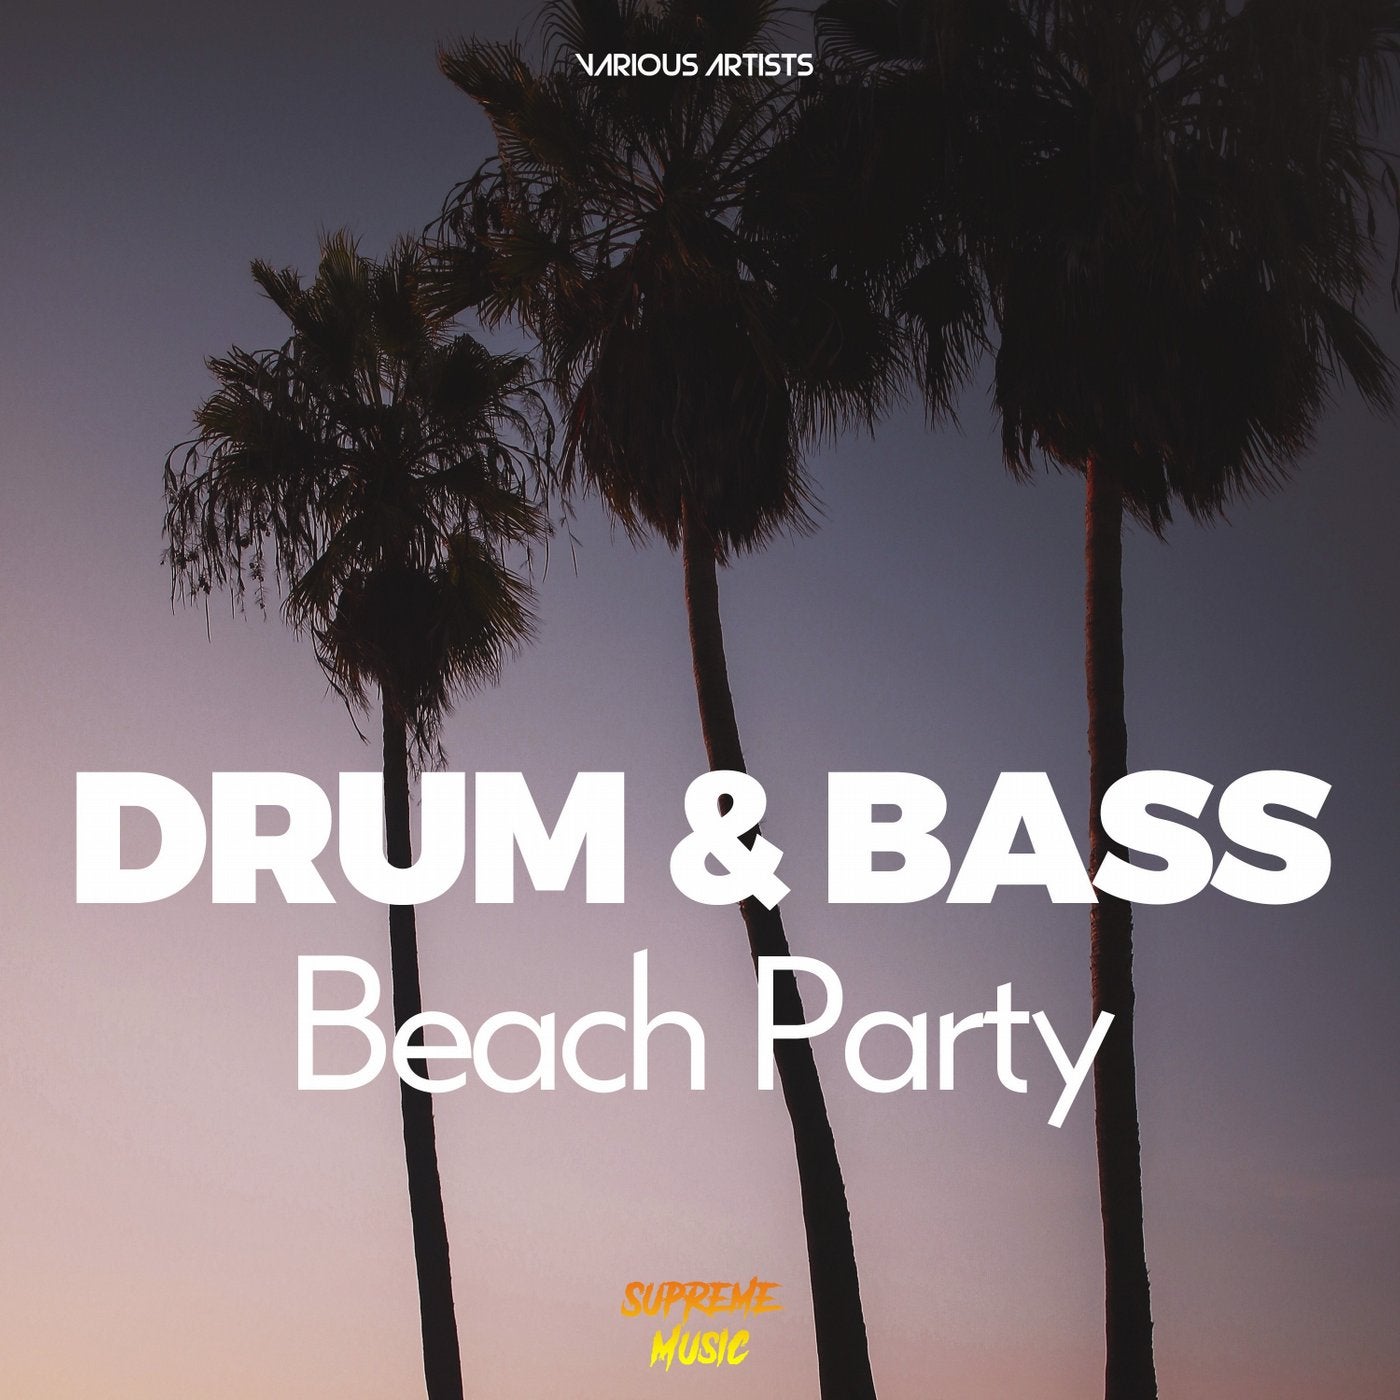 Drum & Bass Beach Party